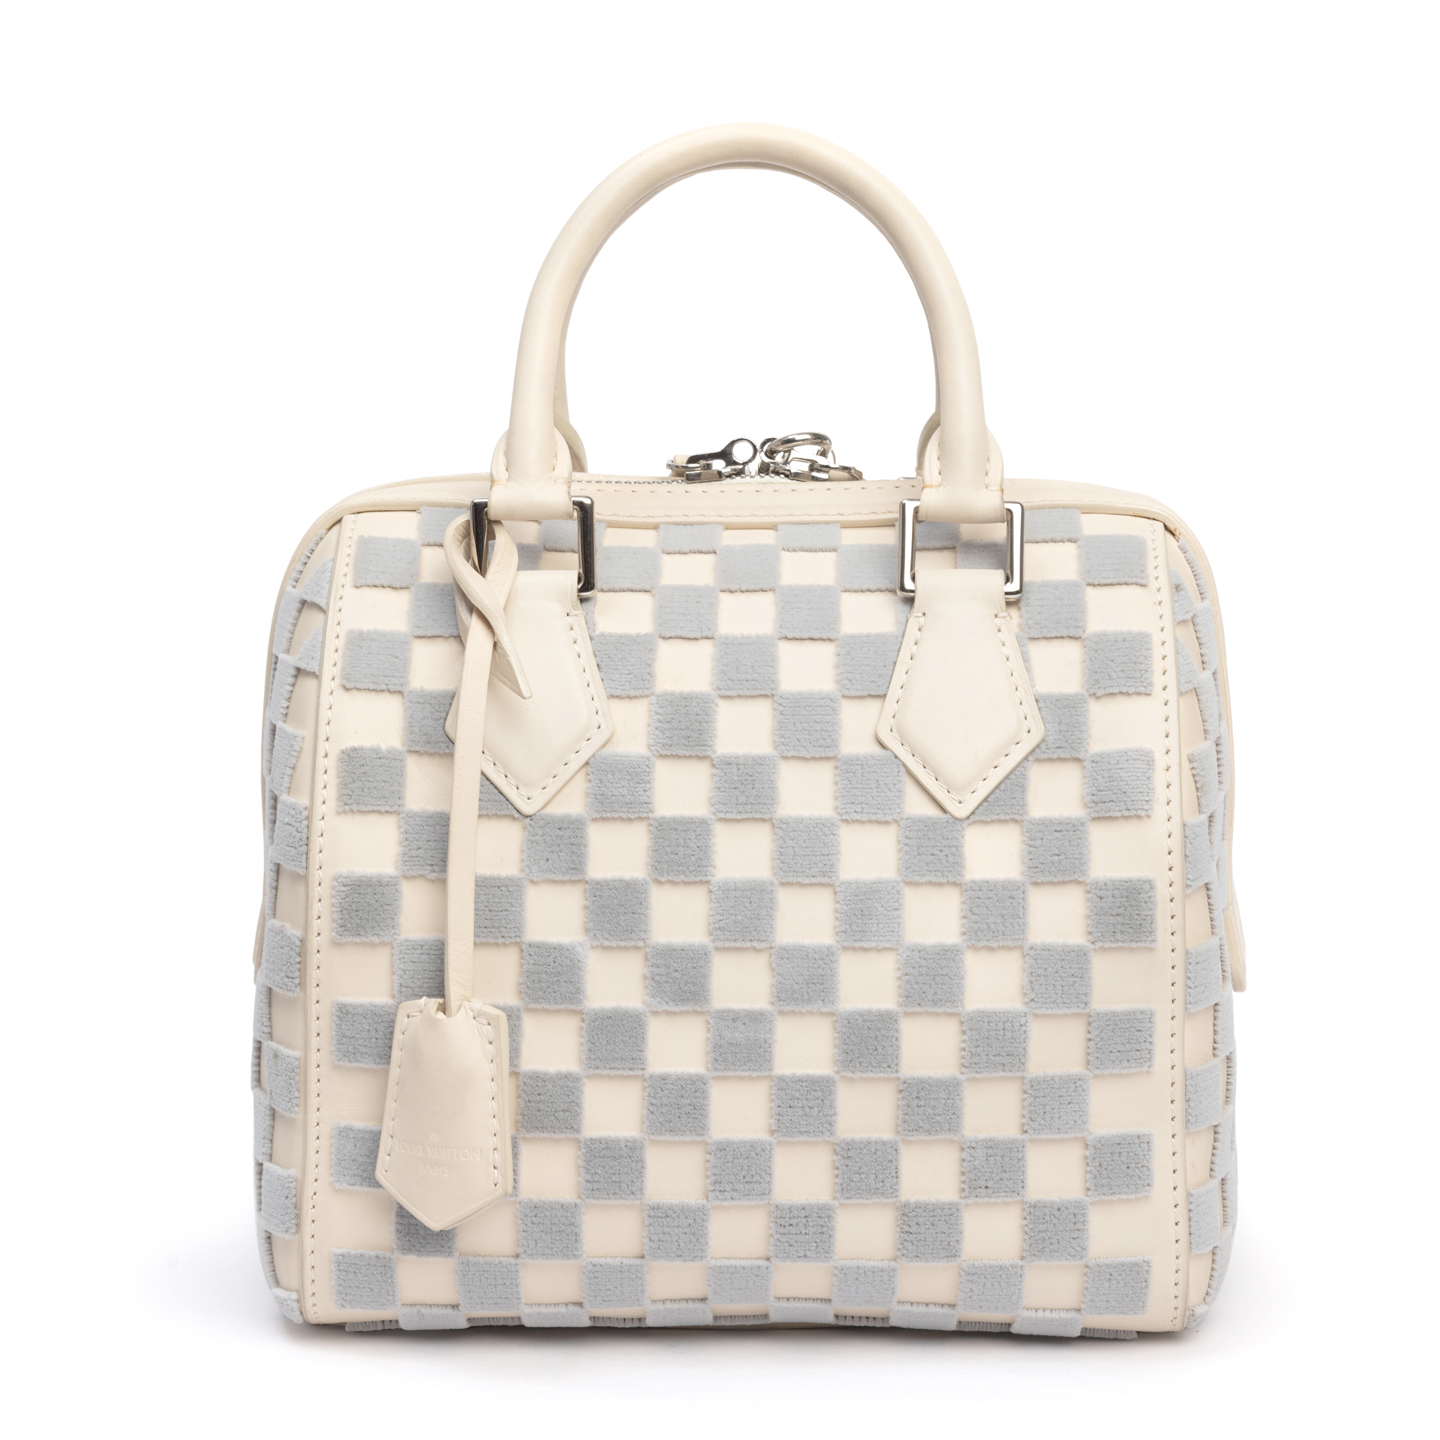 Louis Vuitton Speedy Cube PM Tote Bag